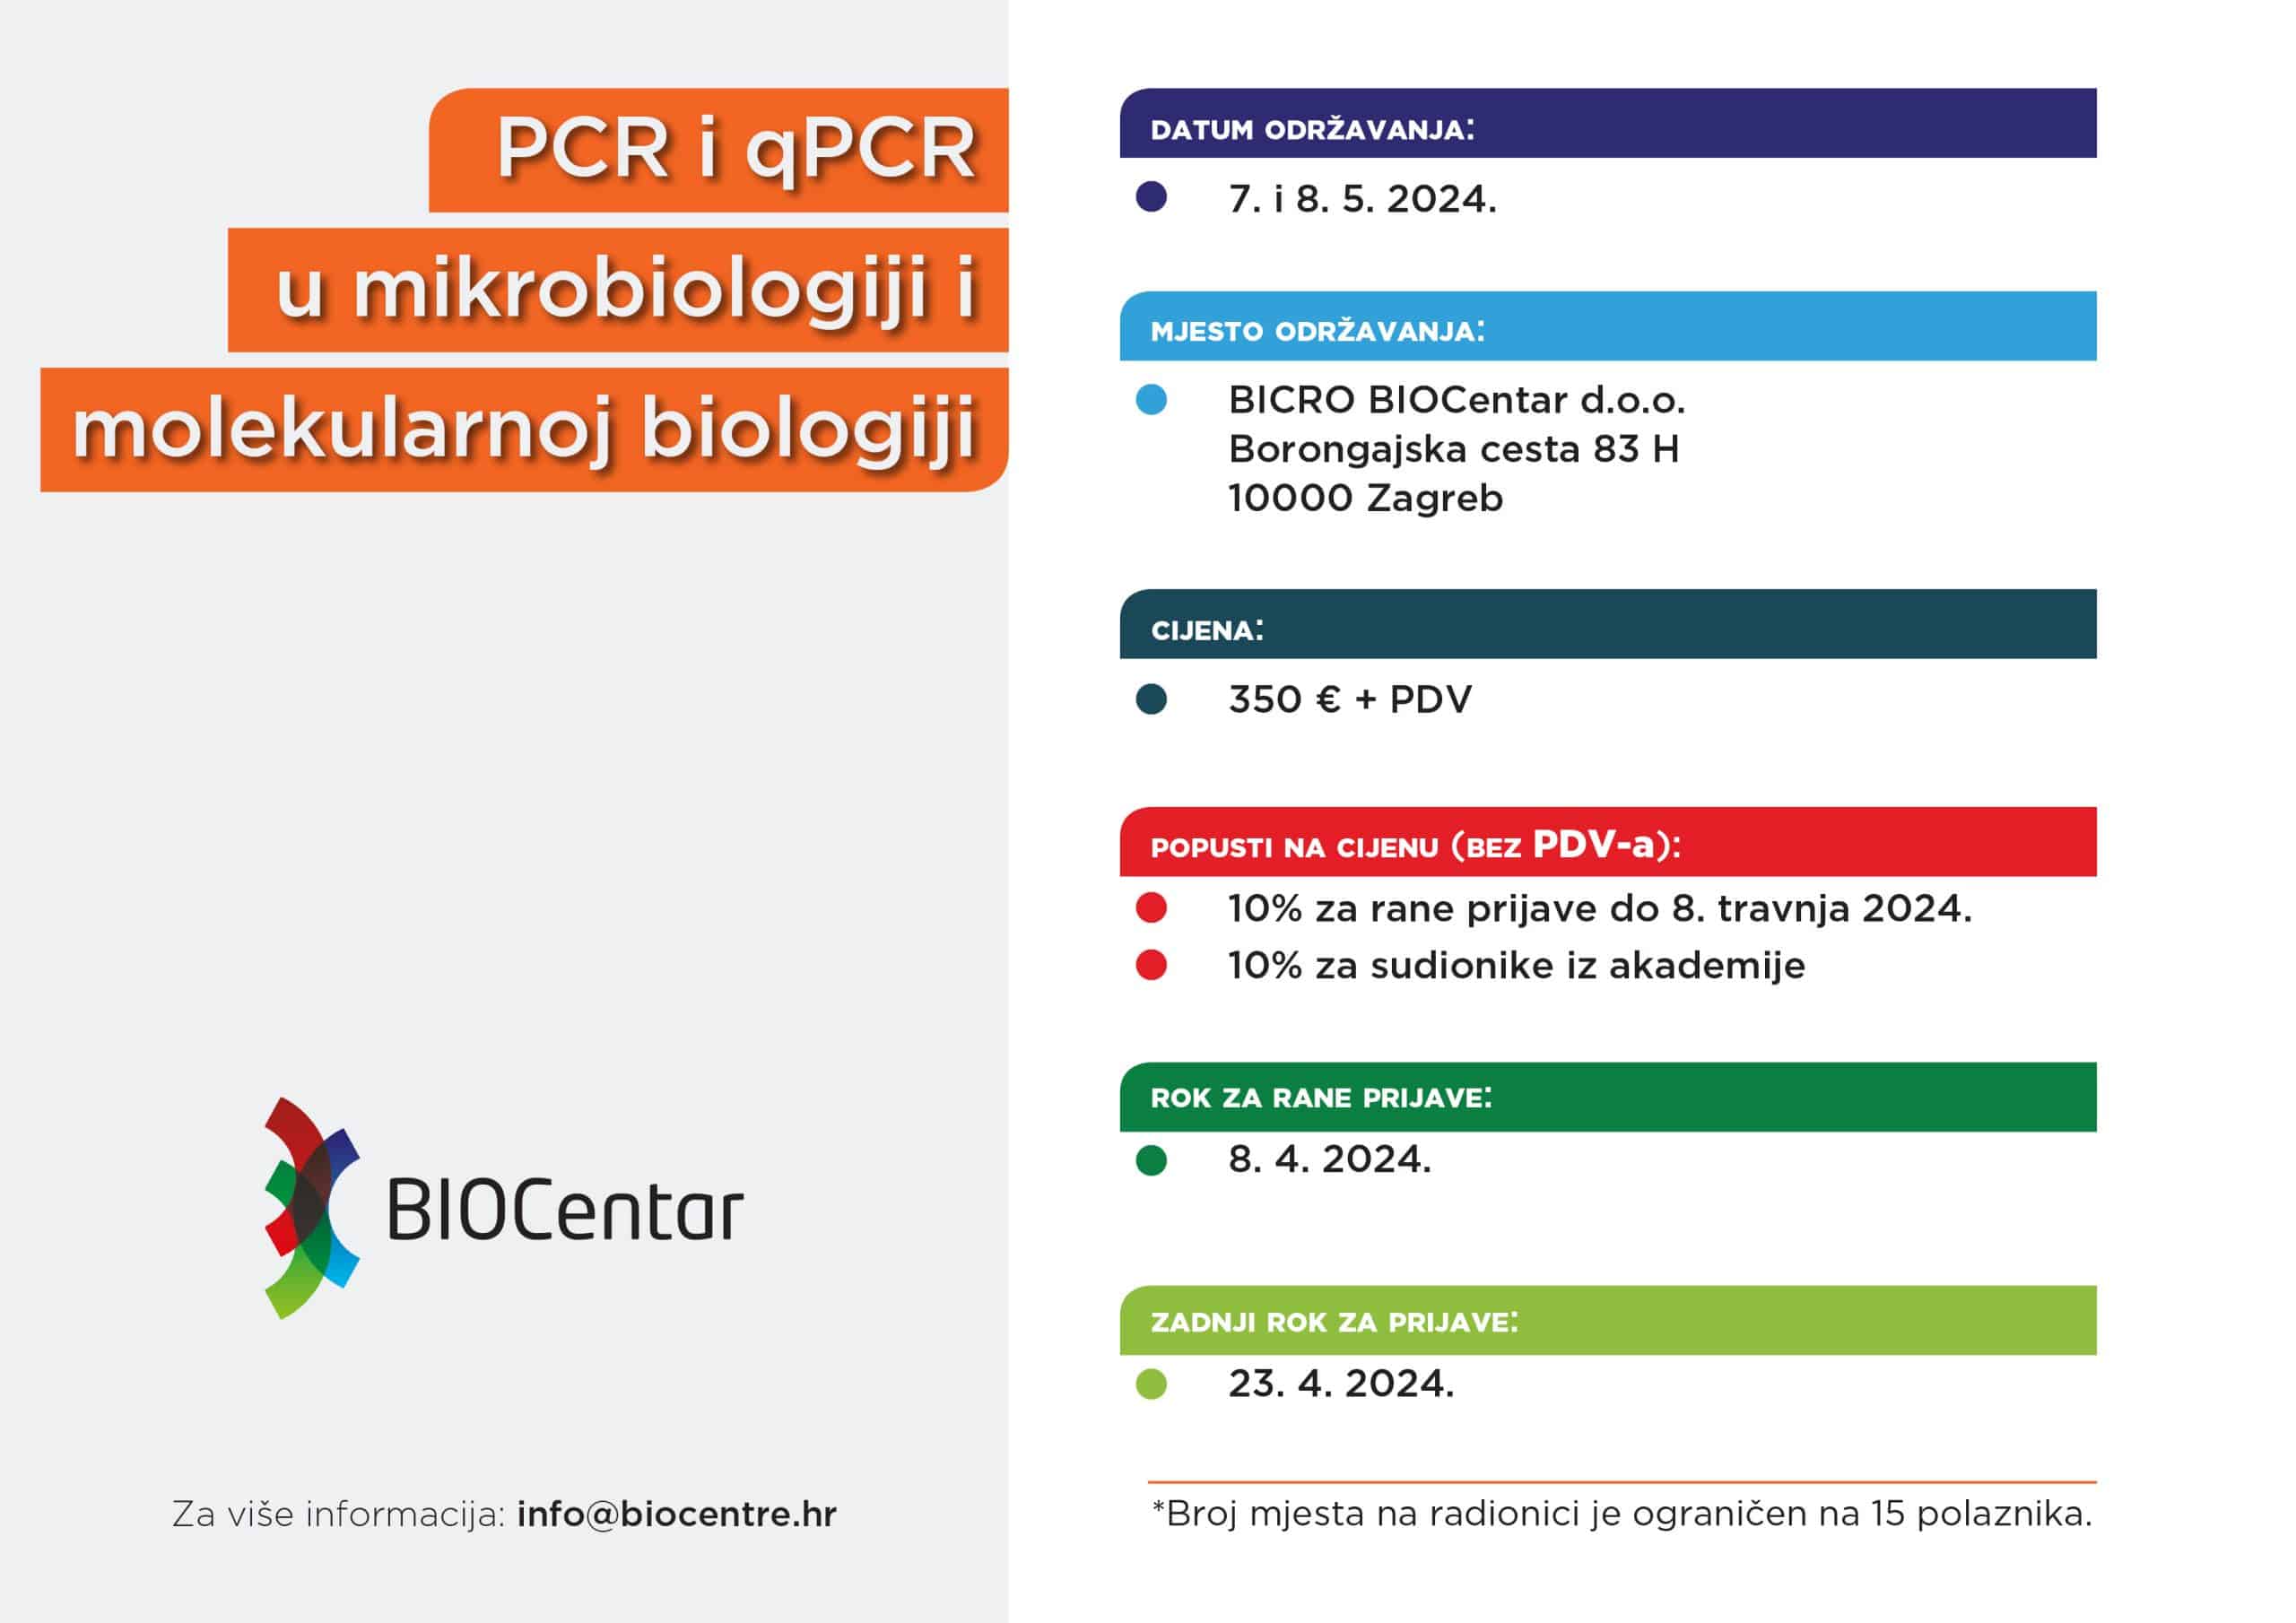 A4 BioCentar Pozivnica PCR Scaled